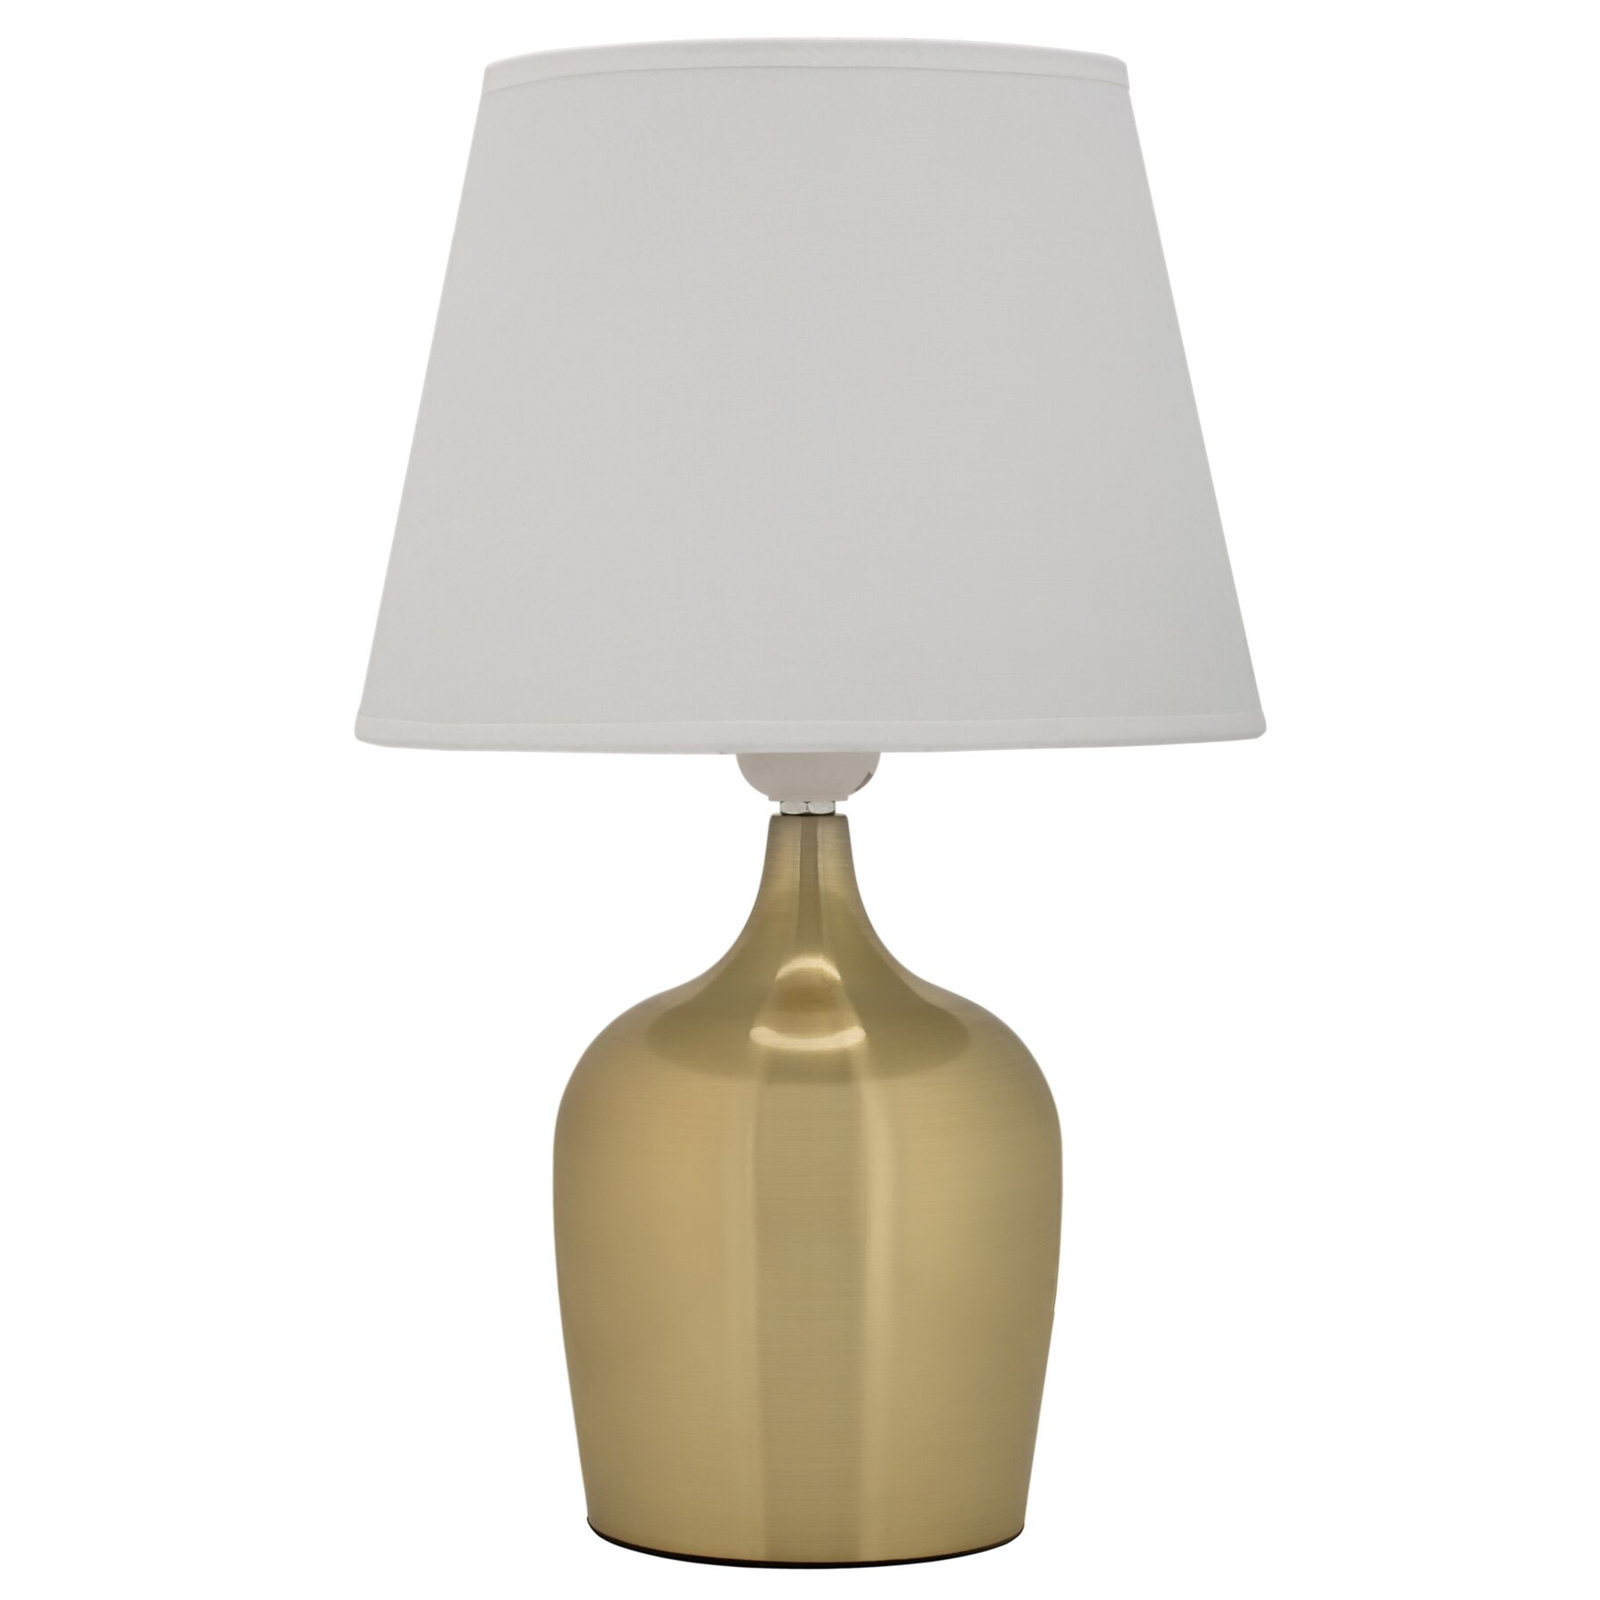 Настолна лампа Pauleen Golden Glamour в златисто/бяло